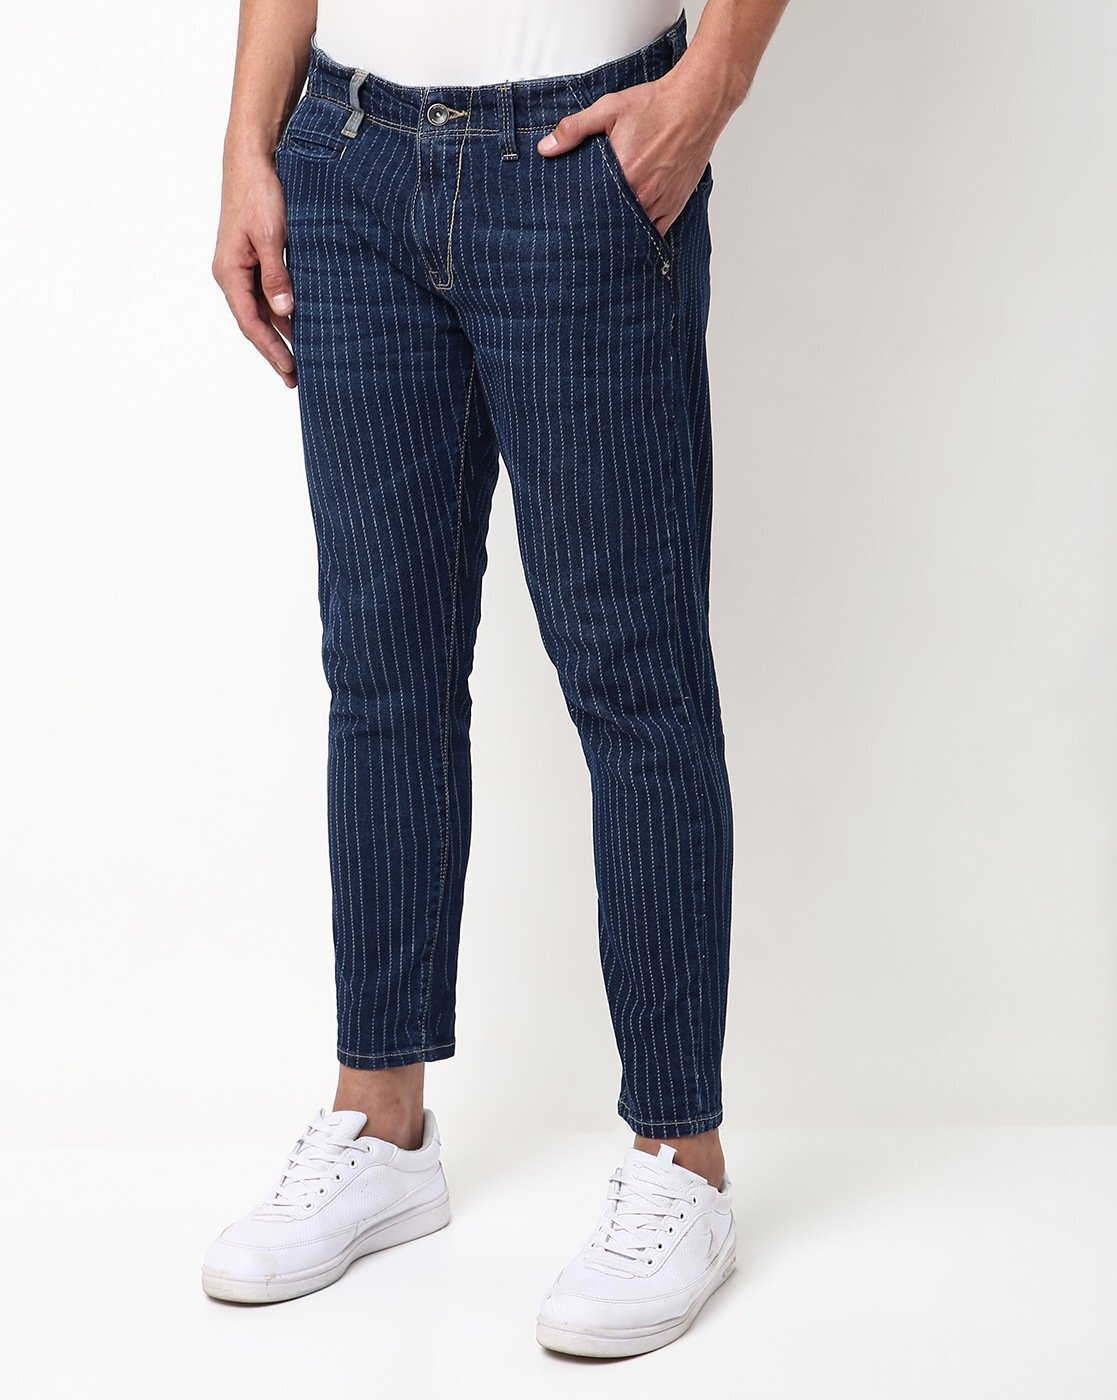 Men's Ankle Length Slim Pencil Pants Trousers Casual Denim Skinny Mens  Jeans | eBay